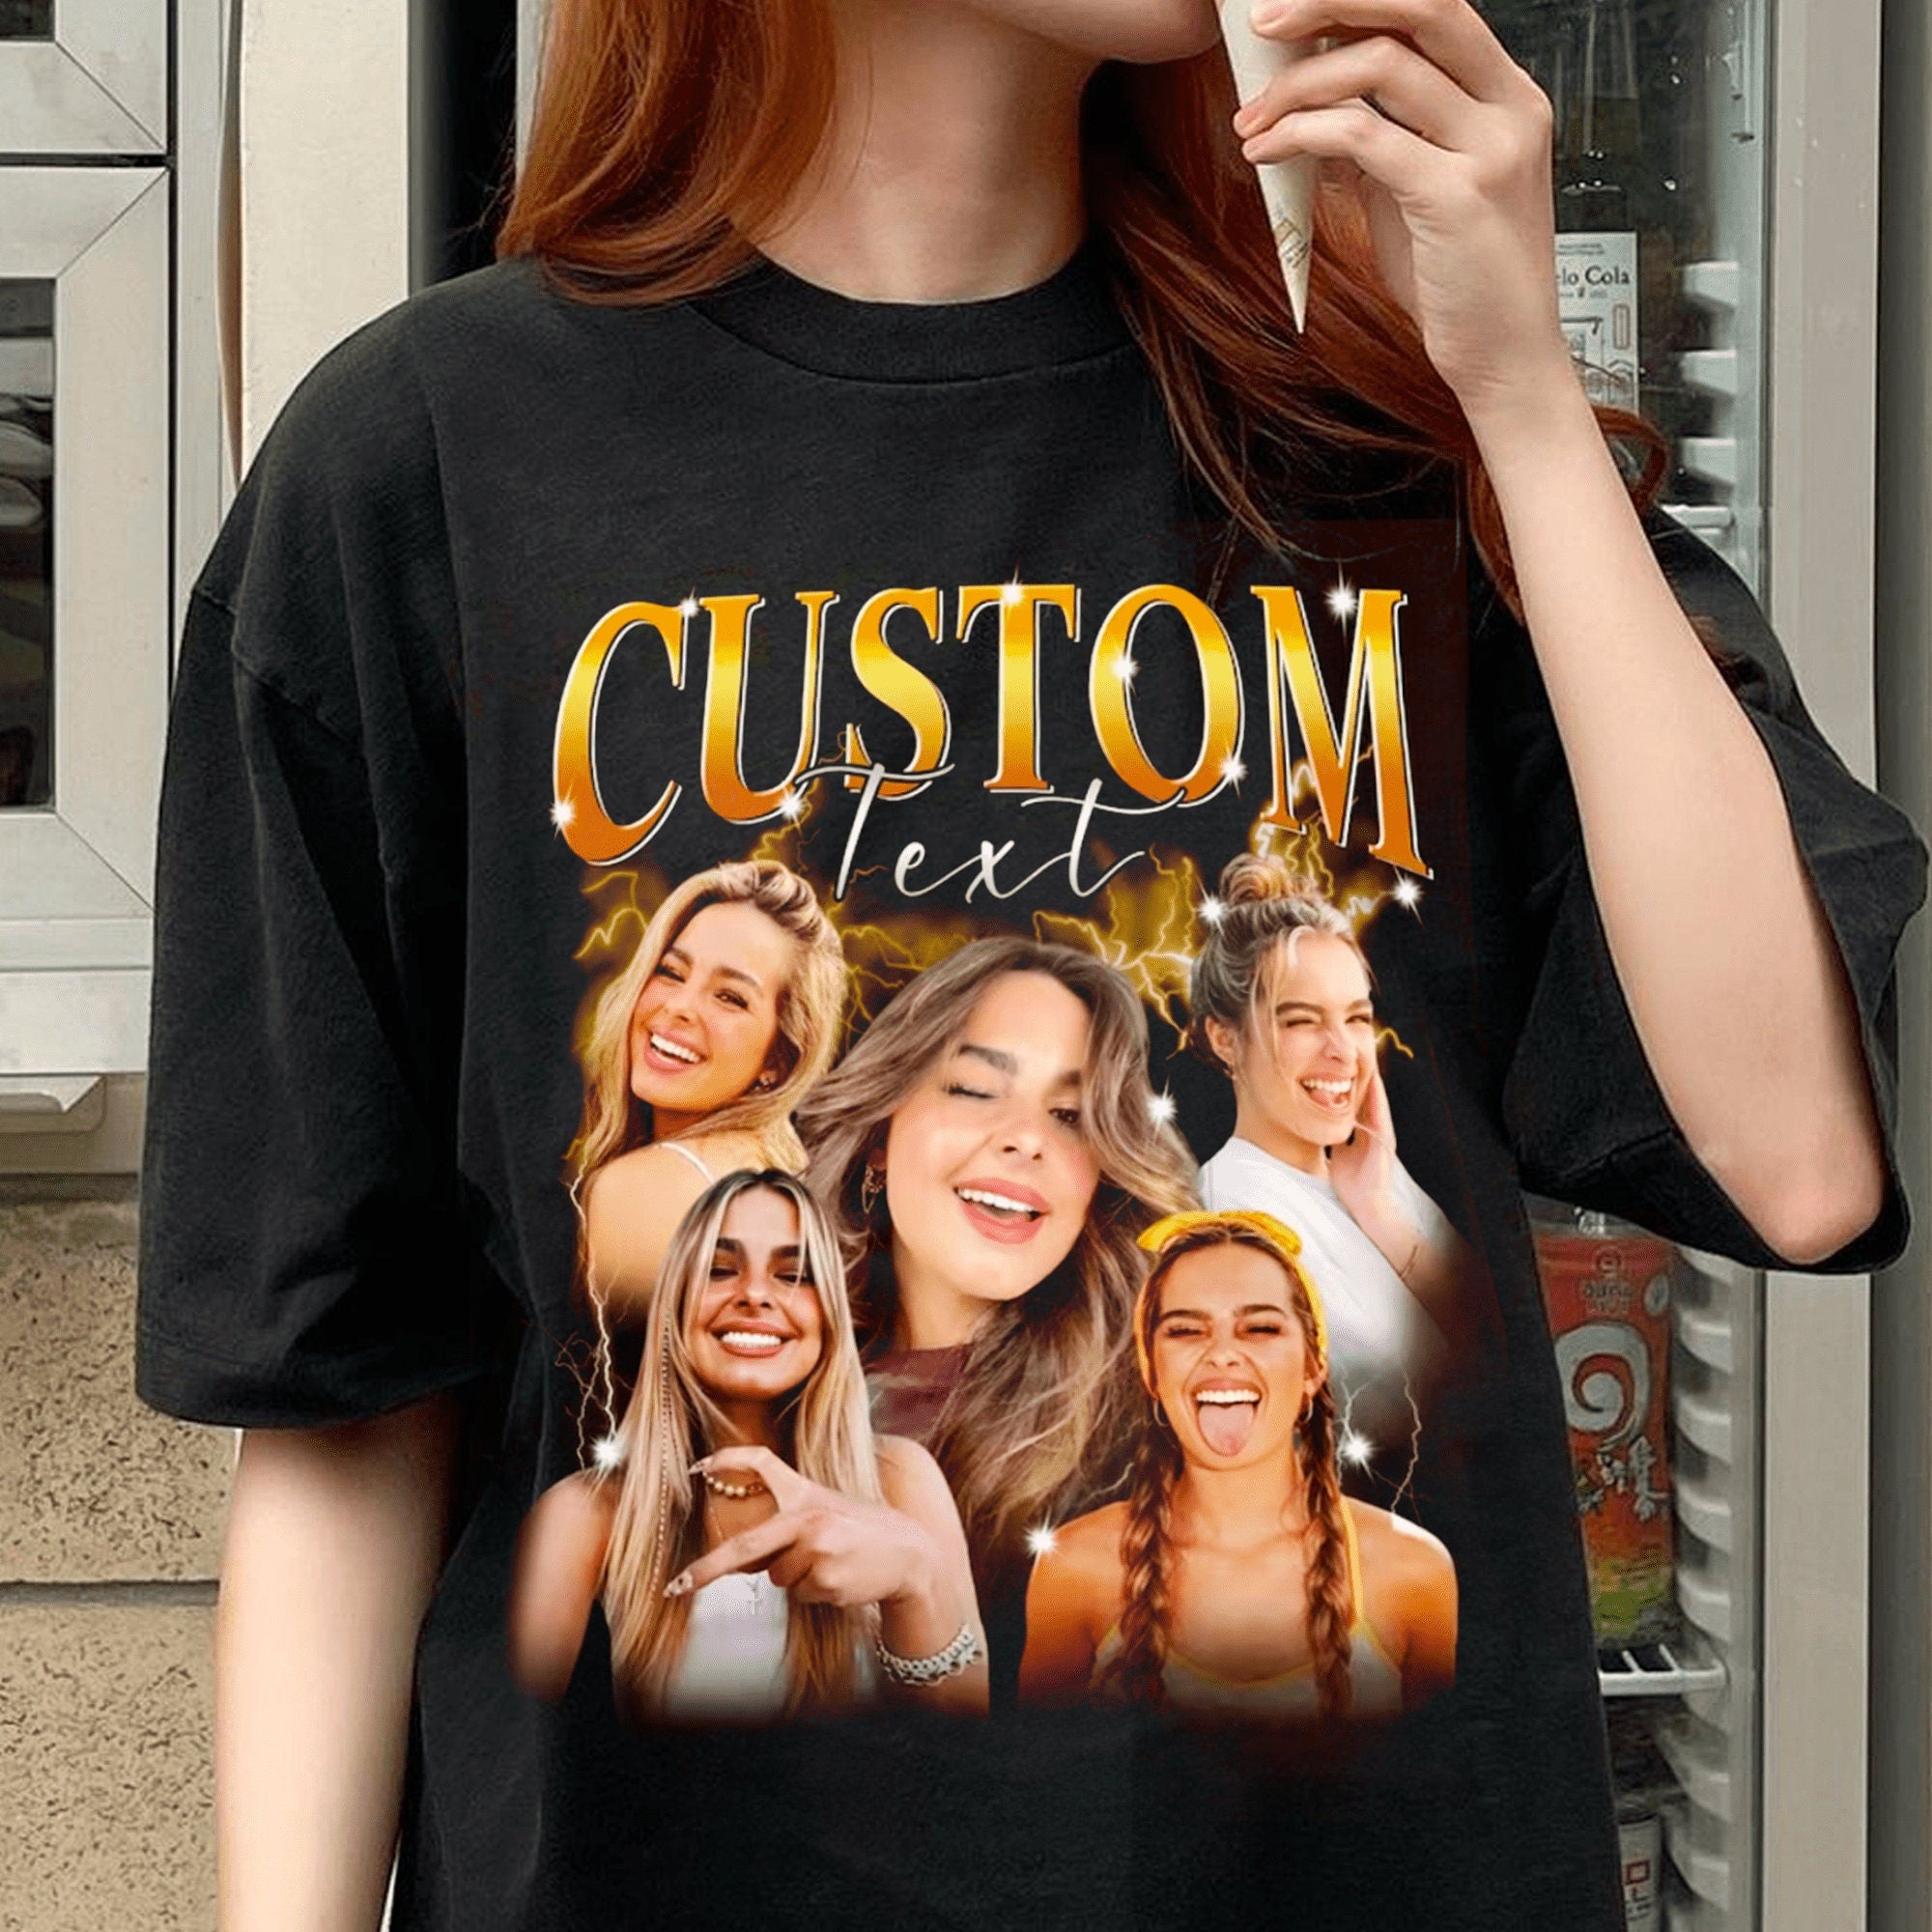 Explore Custom T-Shirts Ideas